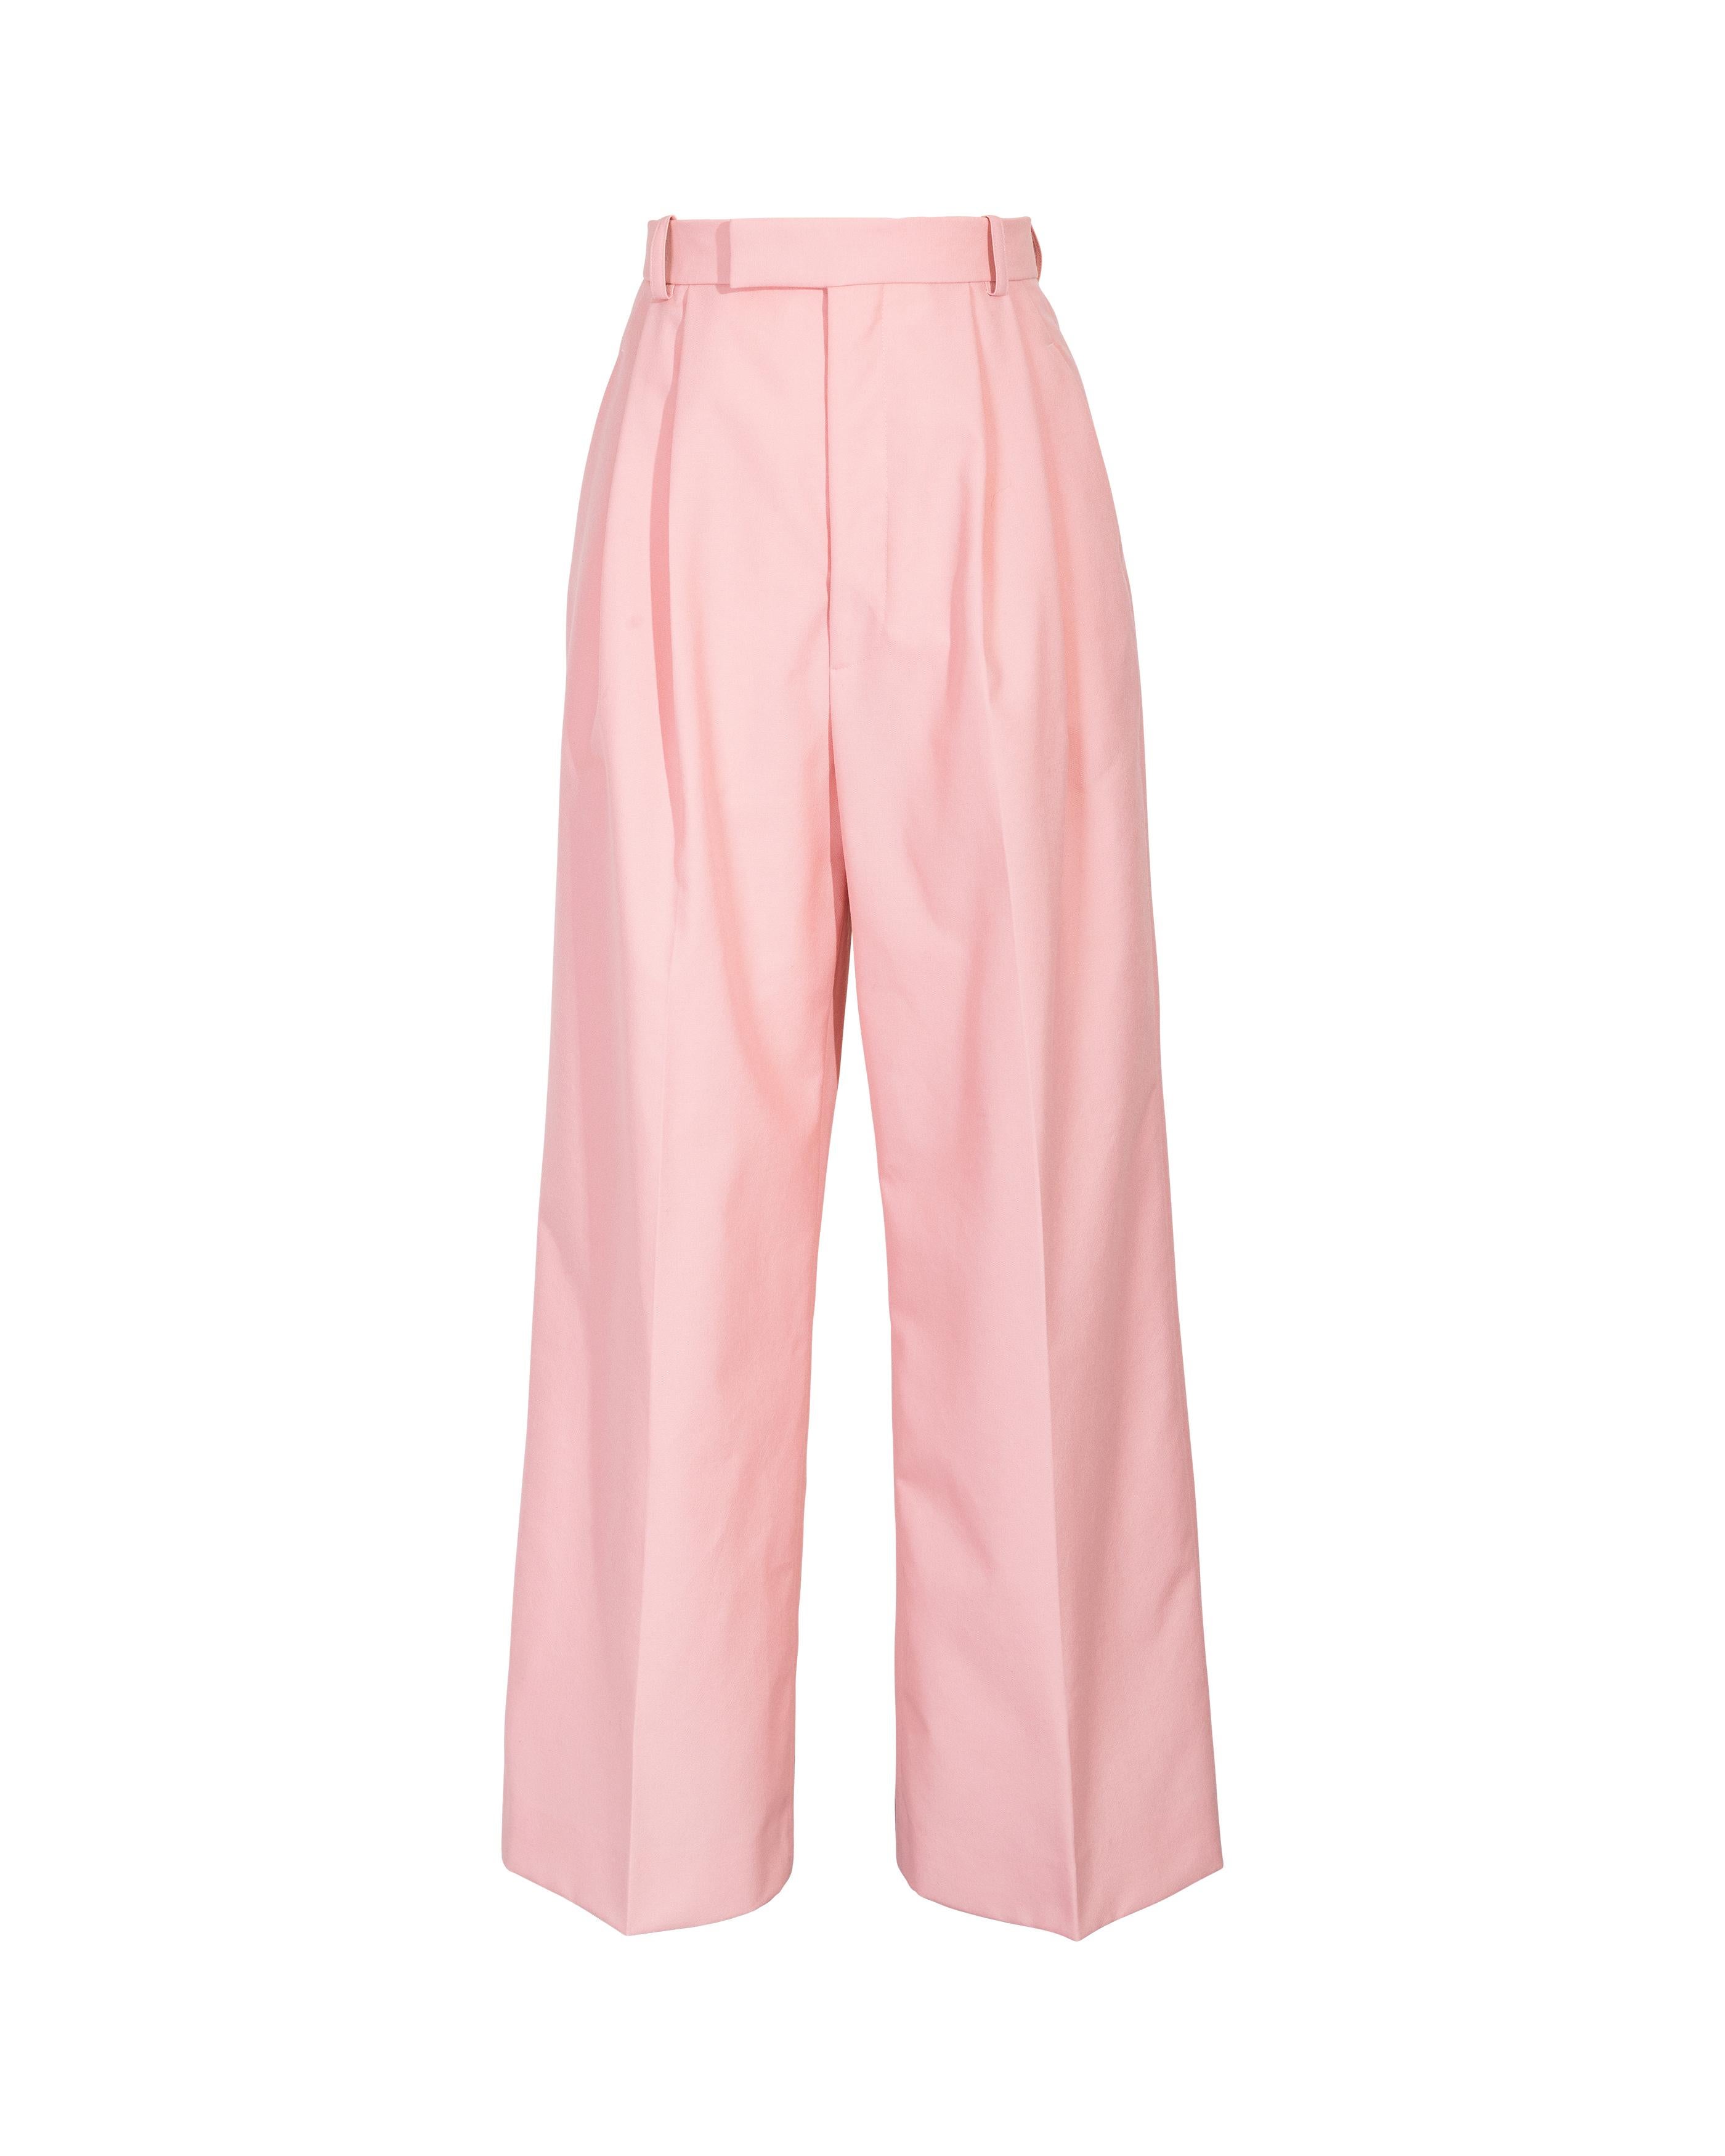 S/S 2018 Old Céline by Phoebe Philo Blush Pink Wool Suit Set 4